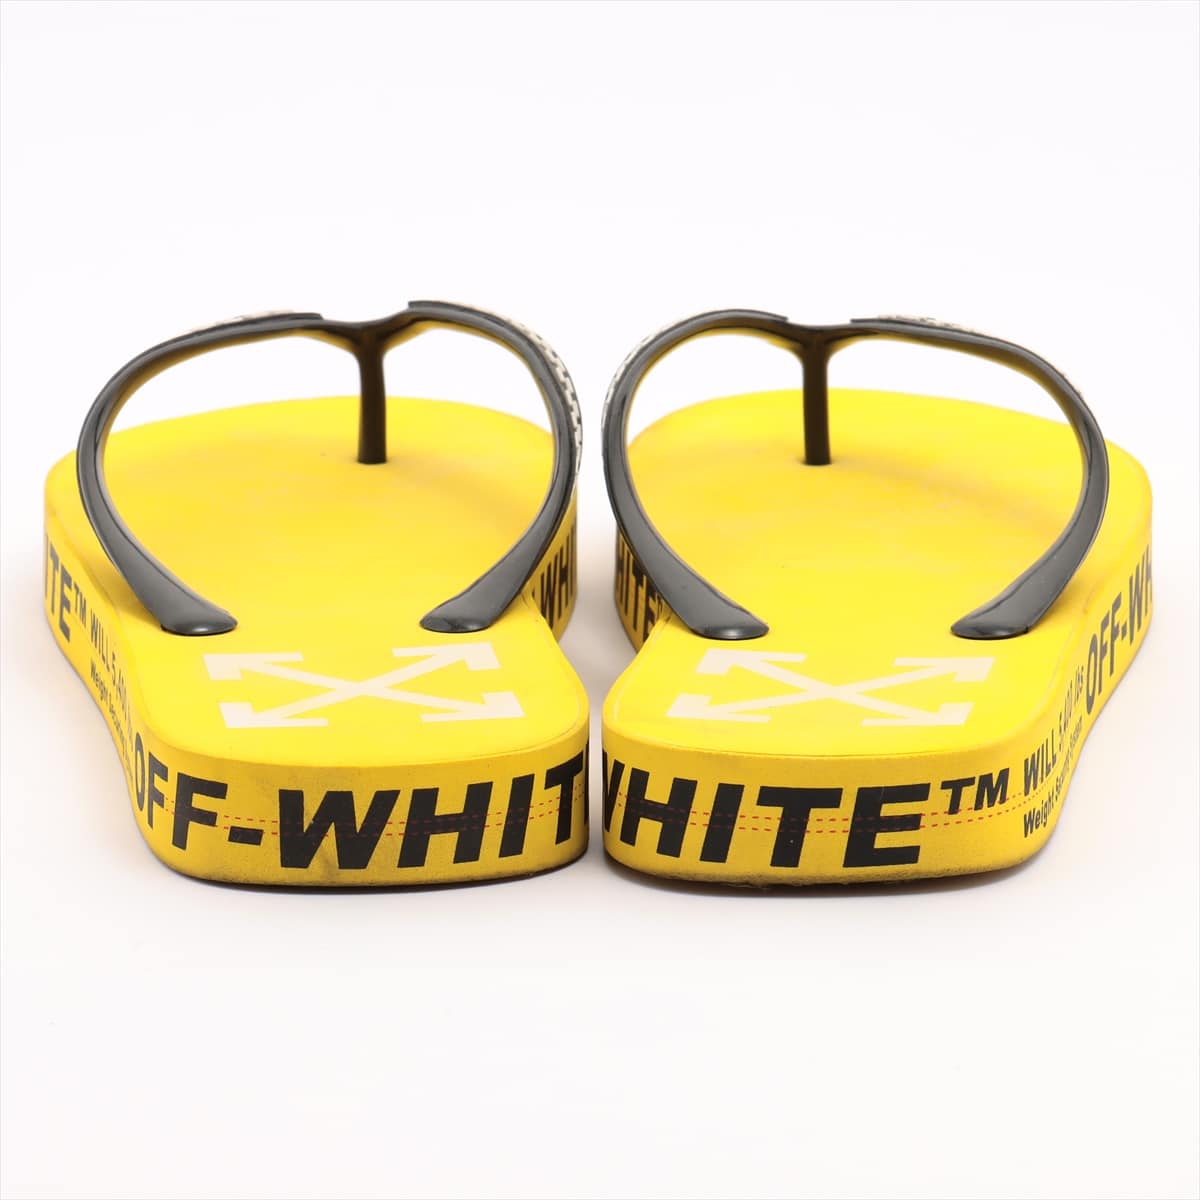 Off-White Rubber Beach sandals Unknown size Men's Yellow arrow logo